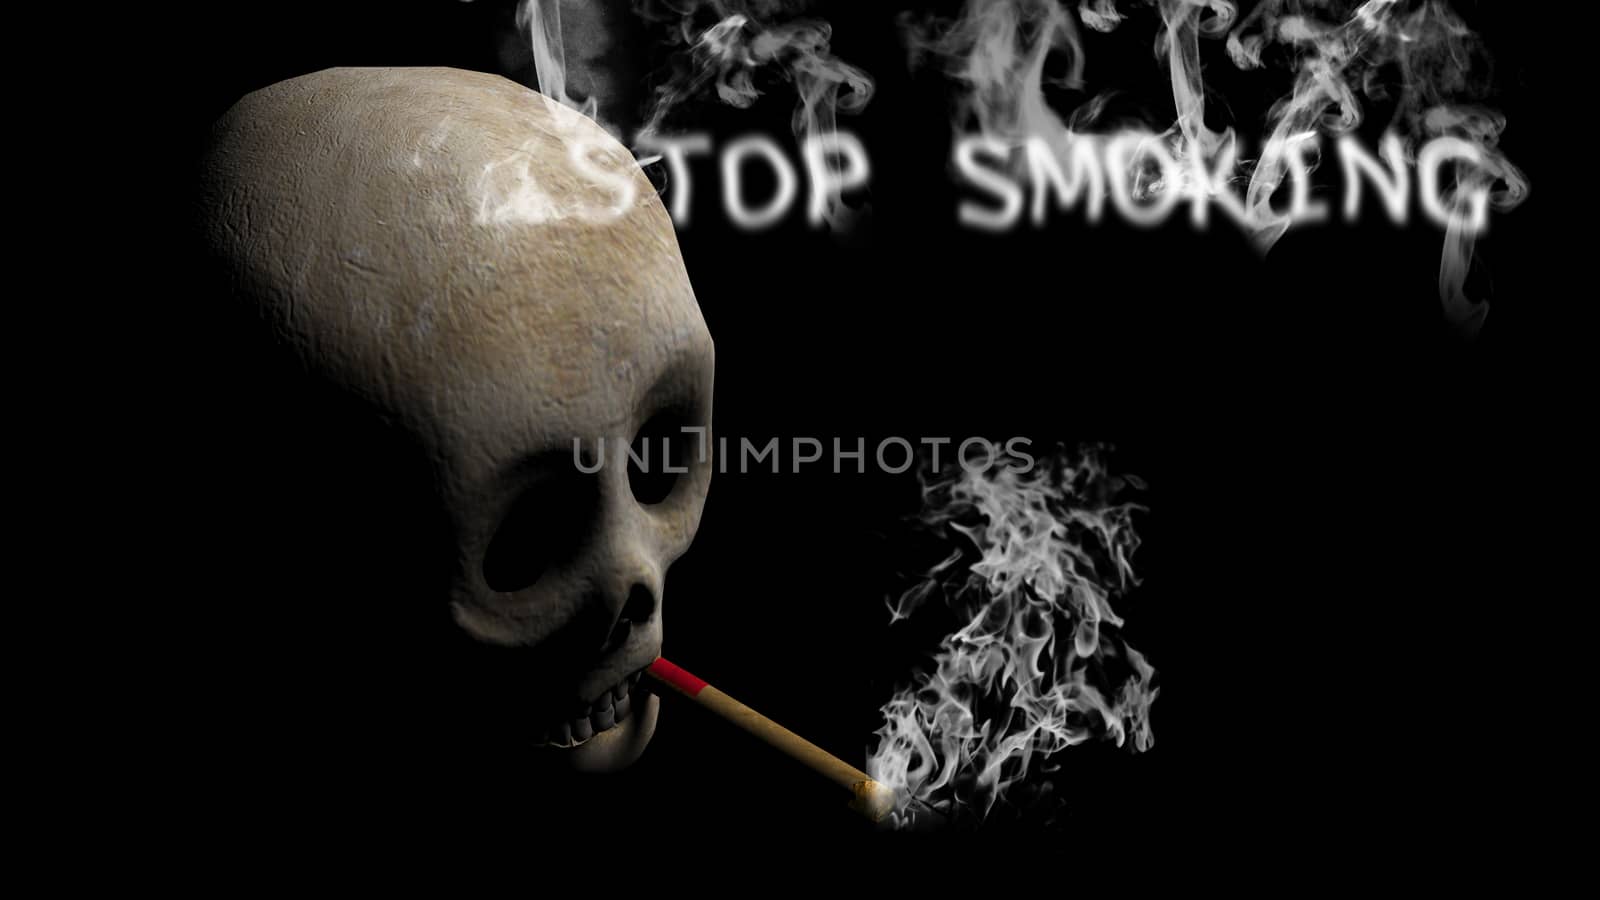 Skull and Cigar with Stop Smoking smoky text